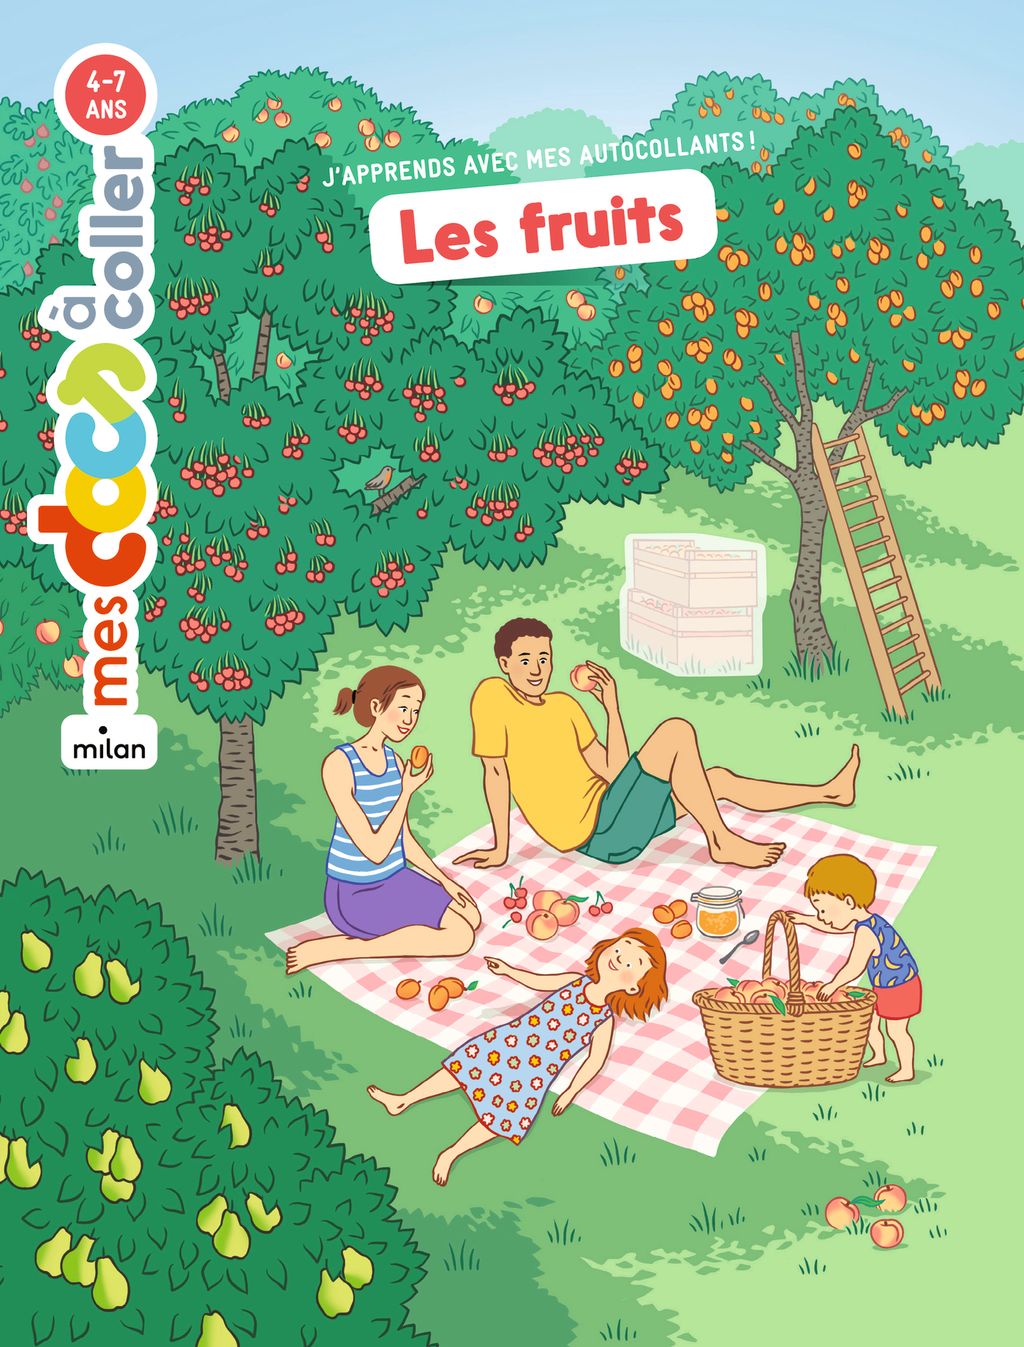 « Les fruits » cover